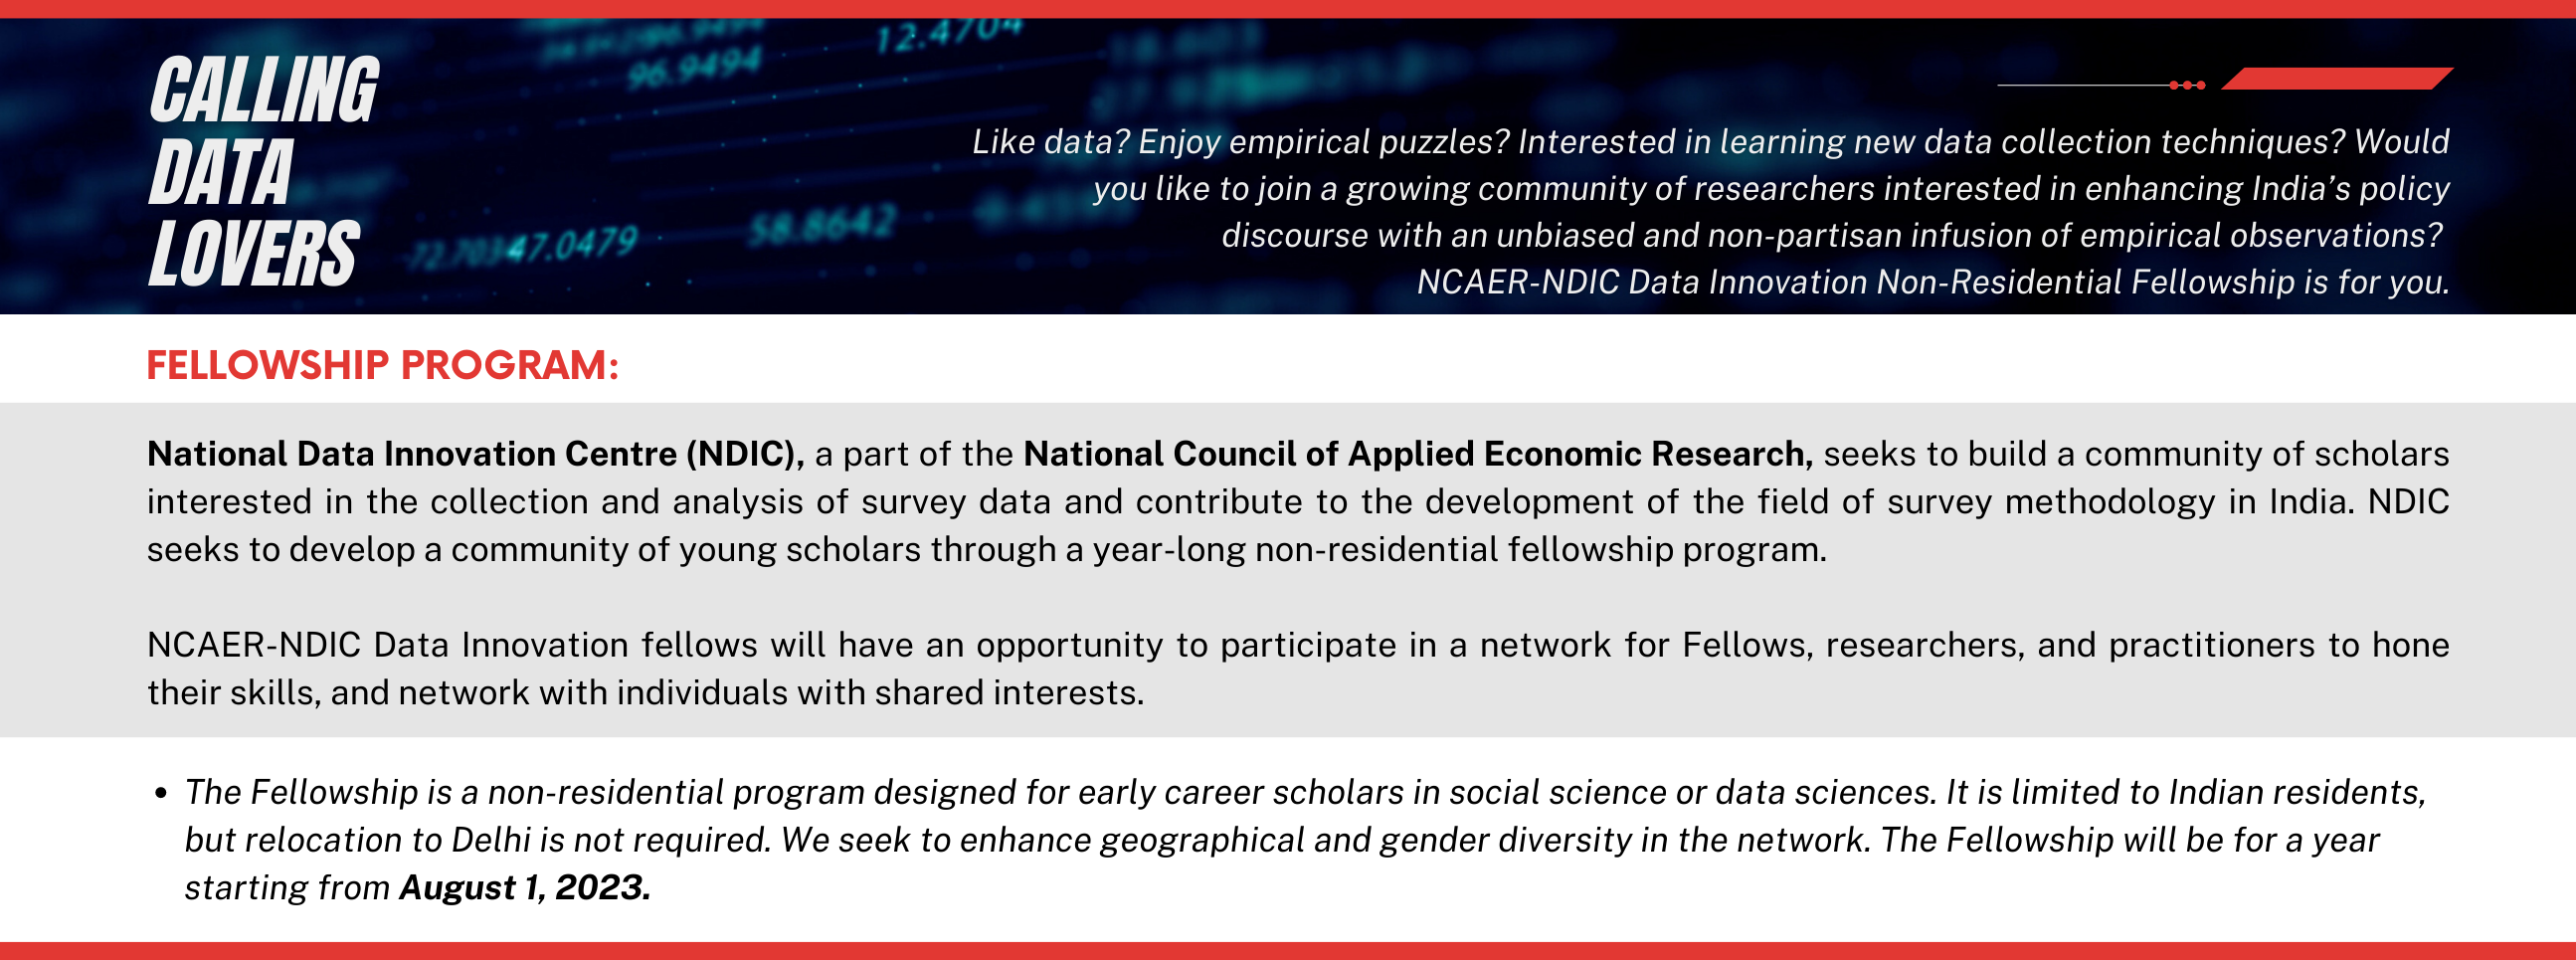 Call for Applications for NCAER-NDIC Data Innovation Fellowship